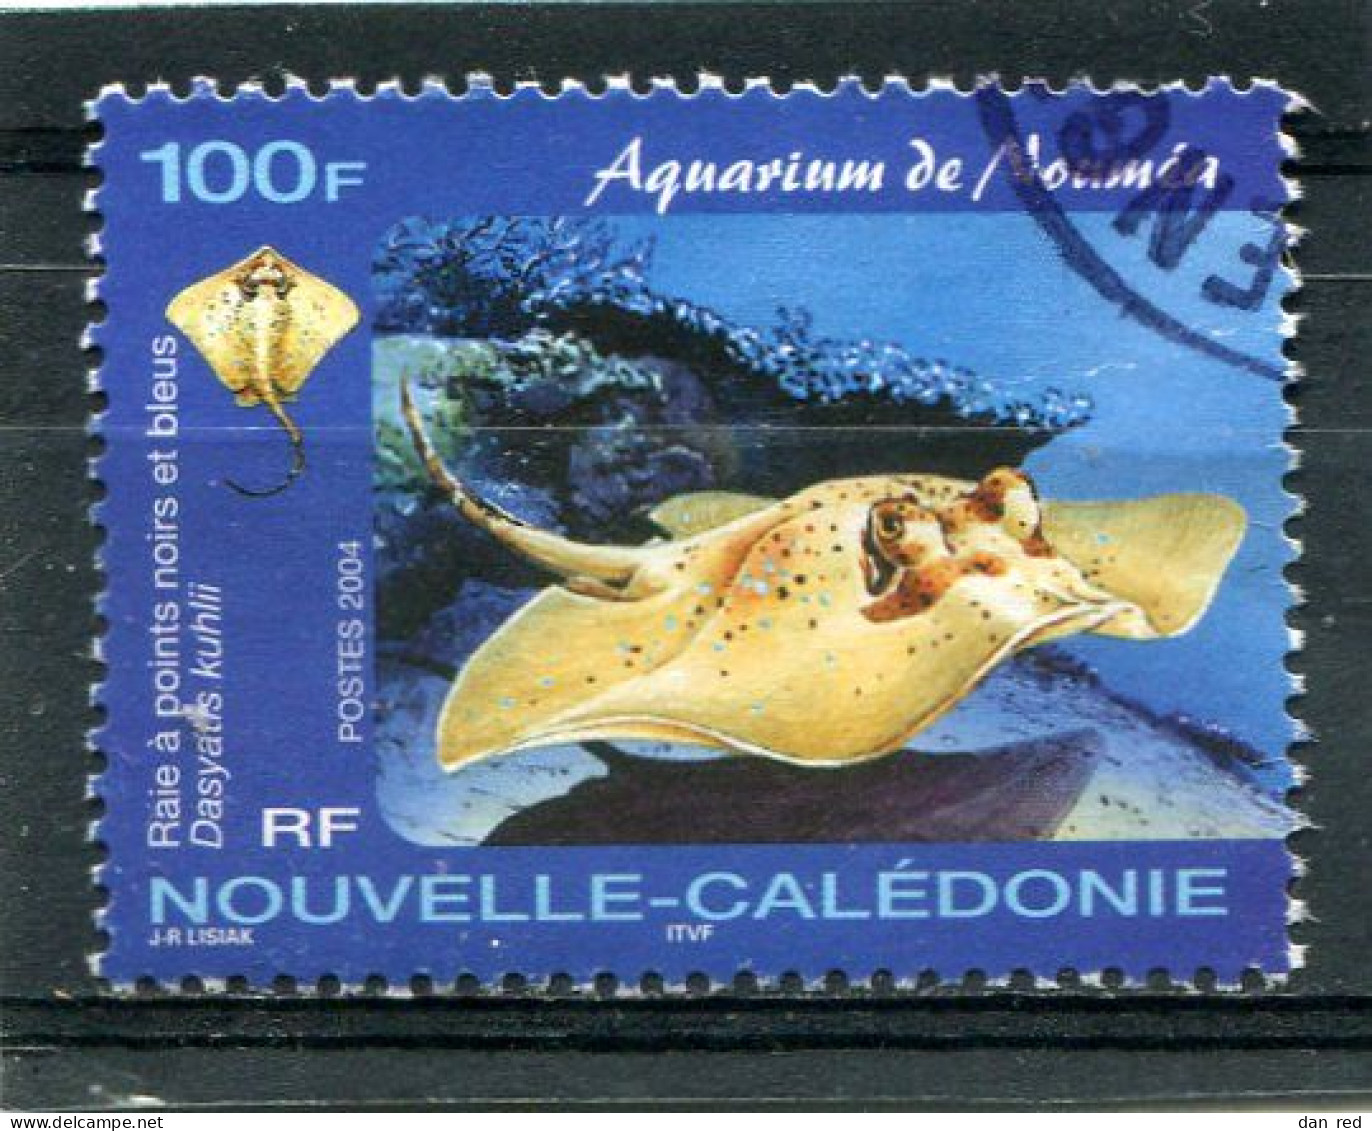 NOUVELLE CALEDONIE  N° 914  (Y&T)  (Oblitéré) - Used Stamps